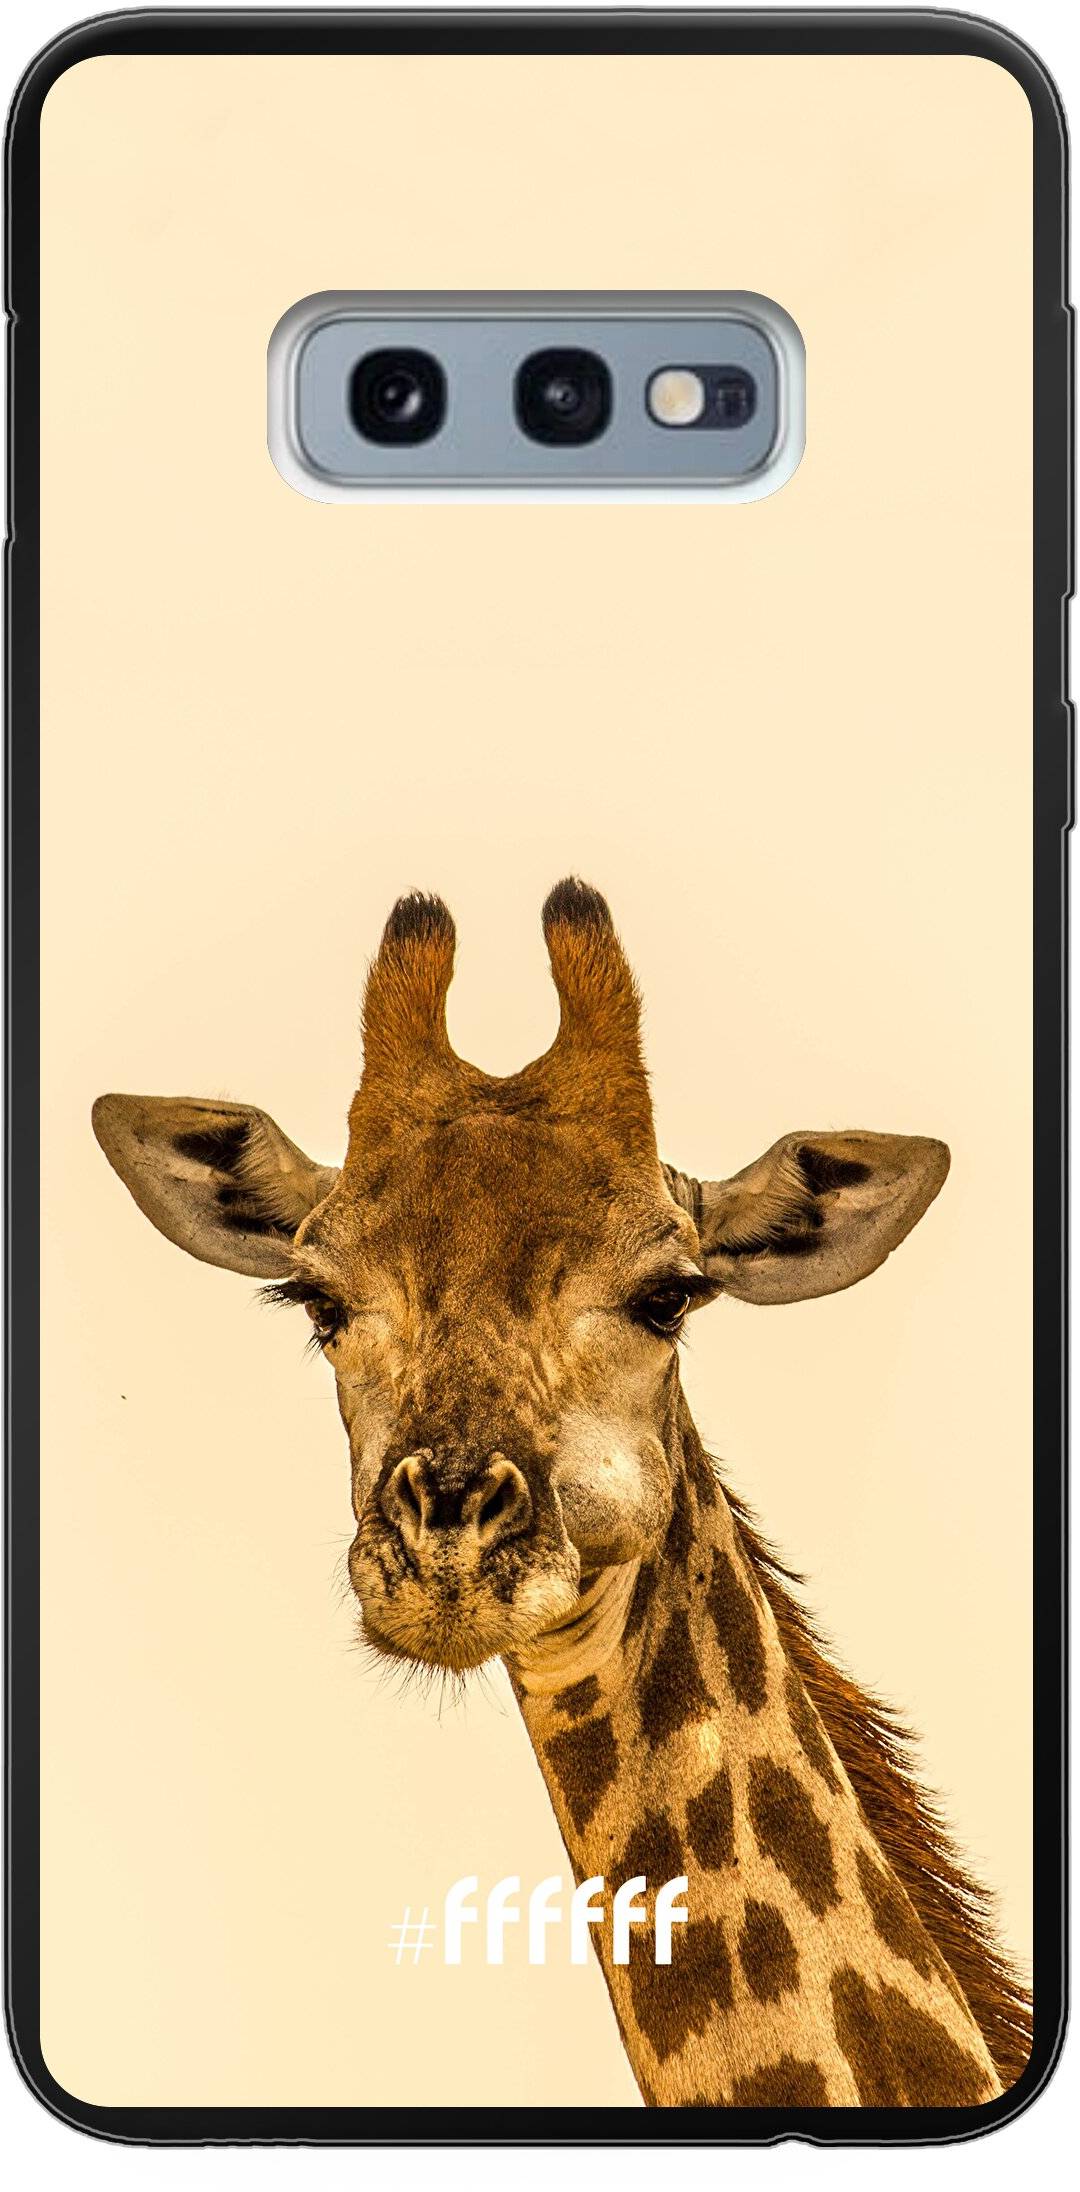 Giraffe Galaxy S10e